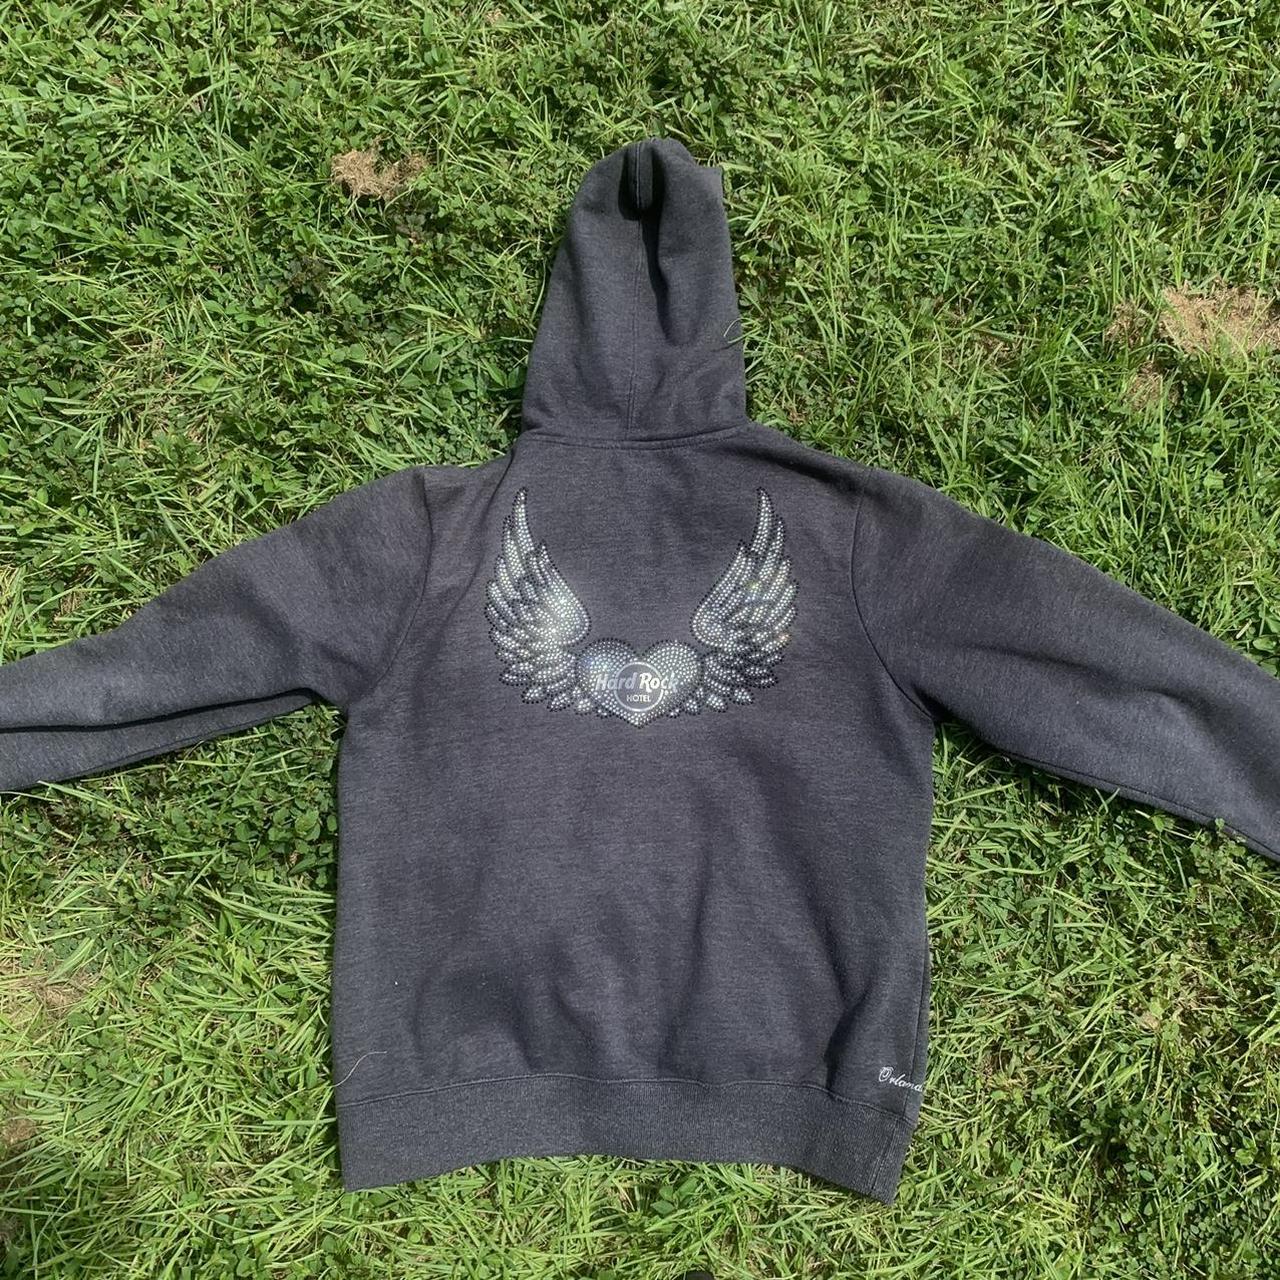 Product Image 2 - Grey Hard rock rhinestone hoodie
Size